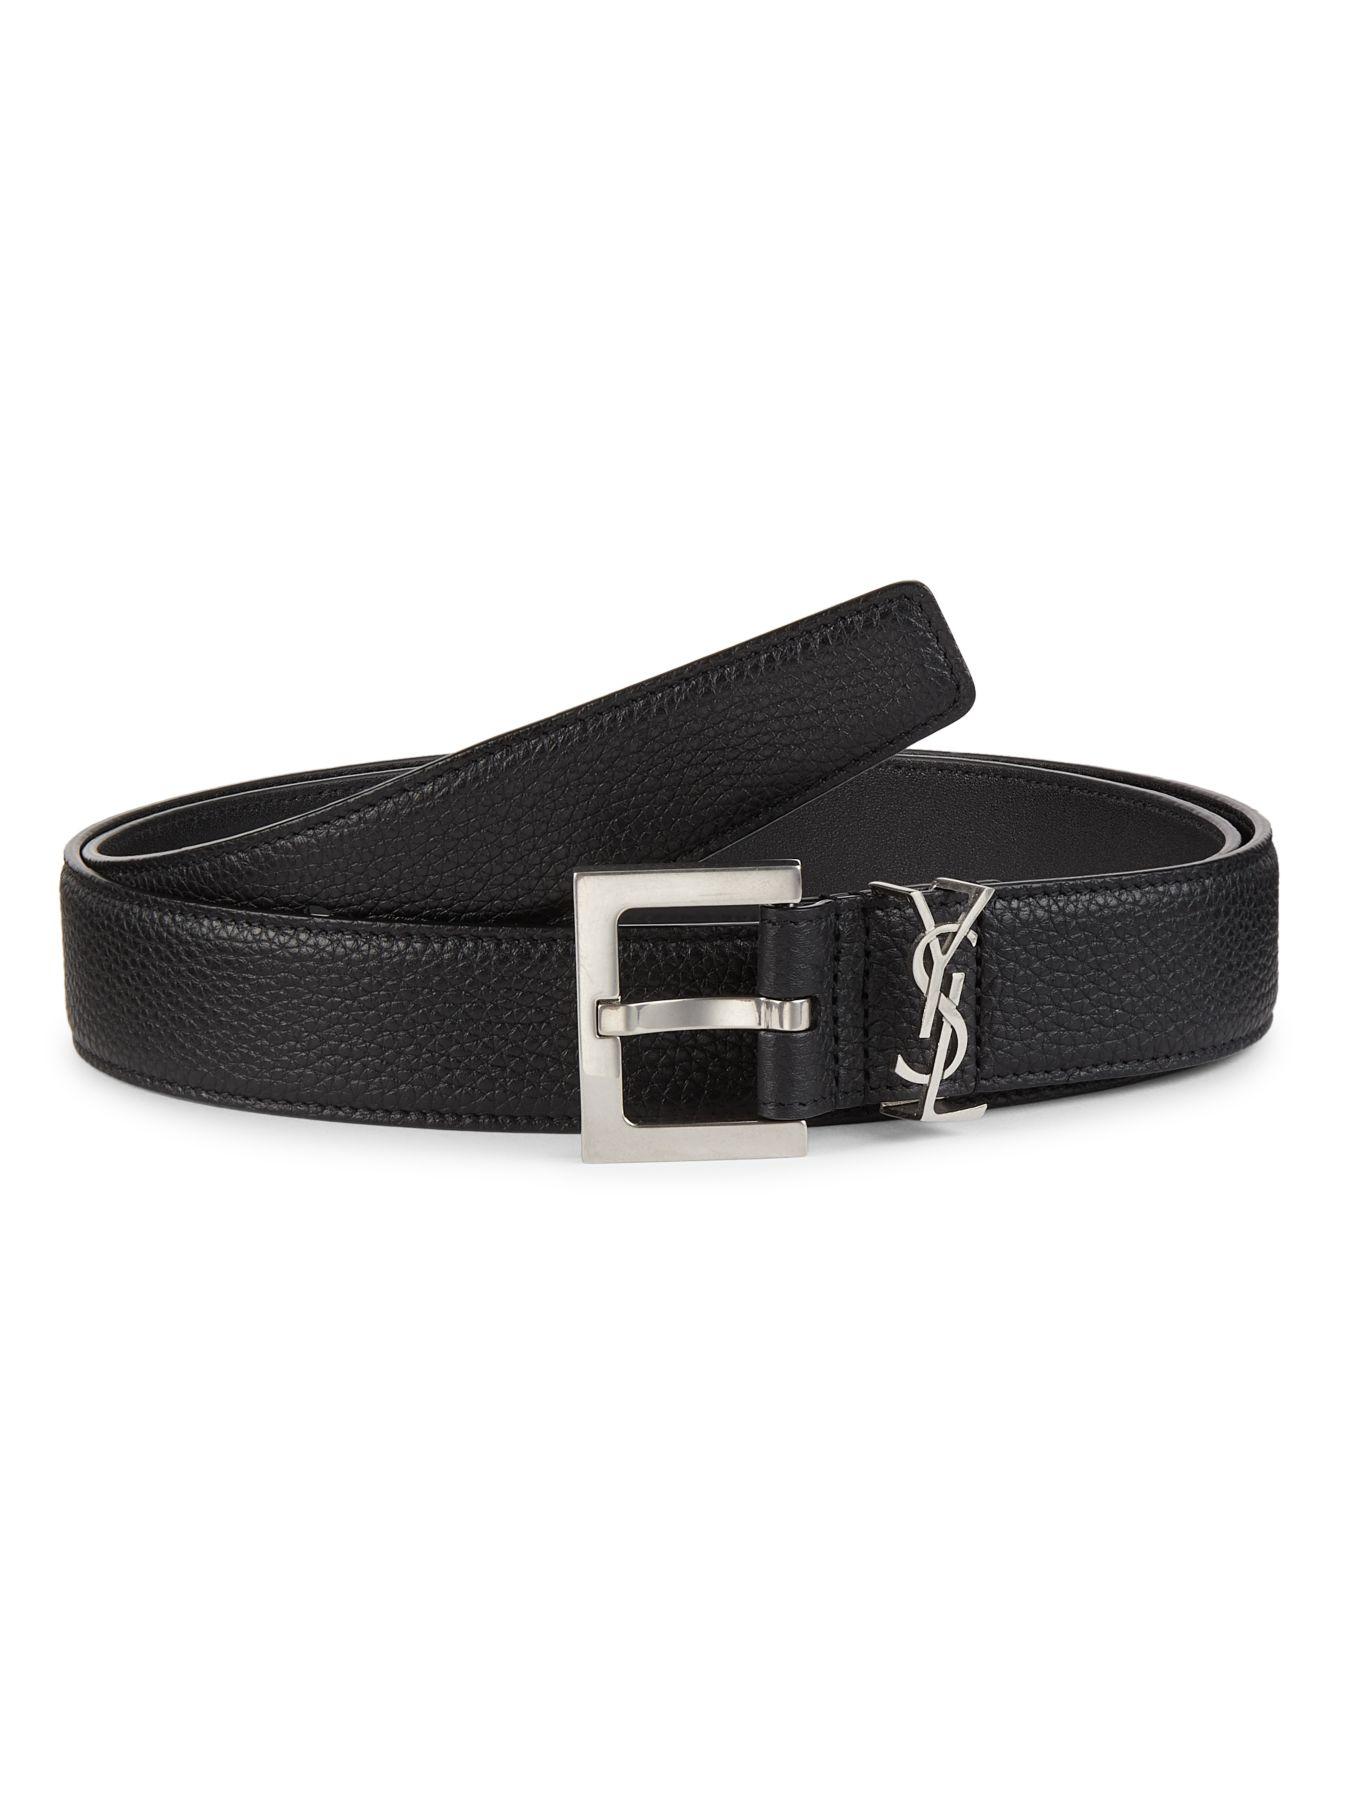 Saint Laurent Ysl Monogram Leather Belt in Black for Men - Lyst